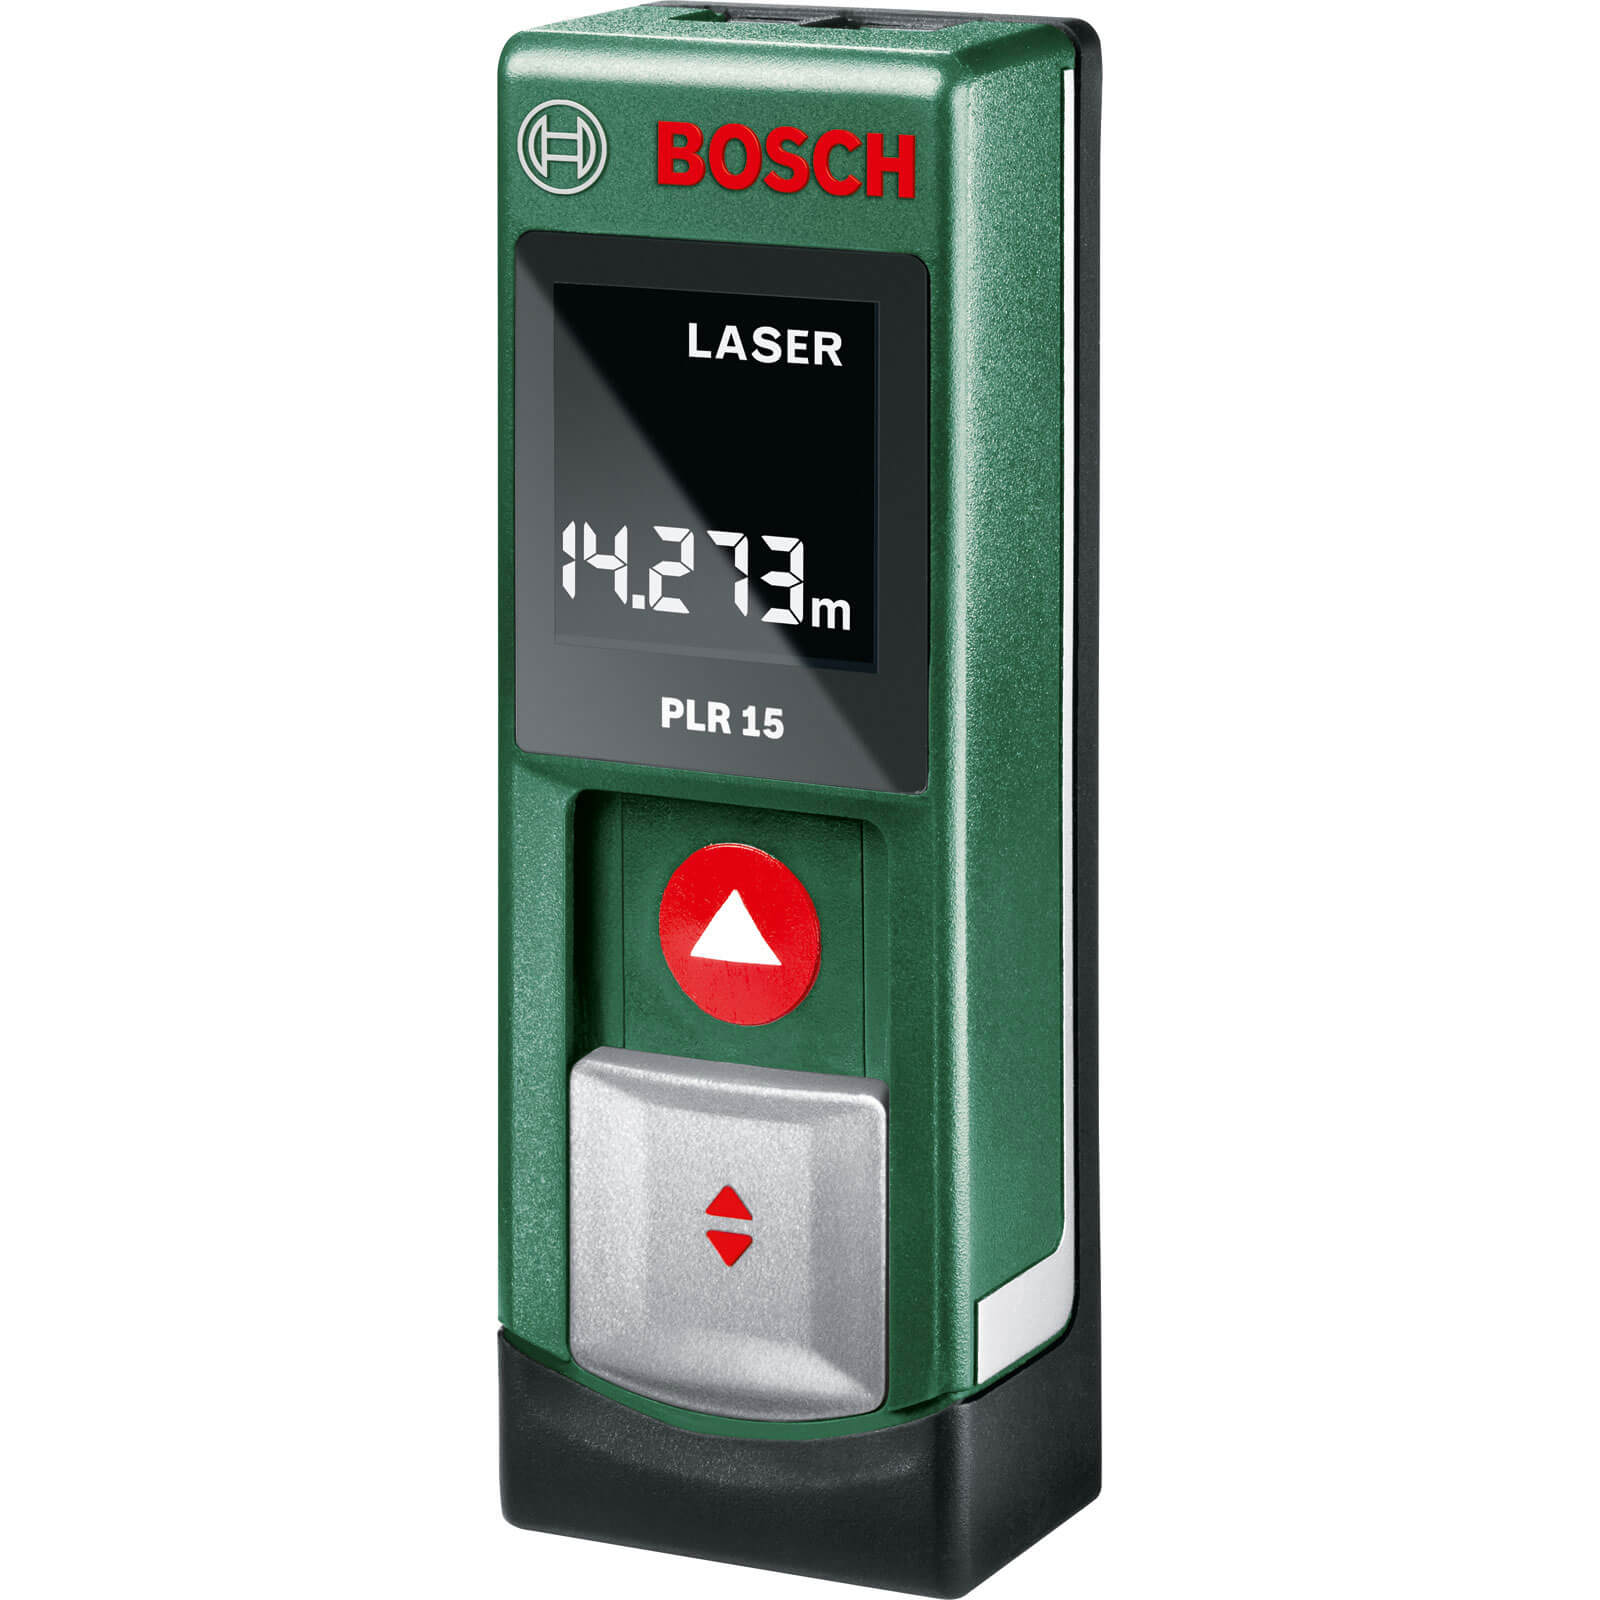 Bosch PLR 15 Digital Laser Distance Measure 15 Metre Range